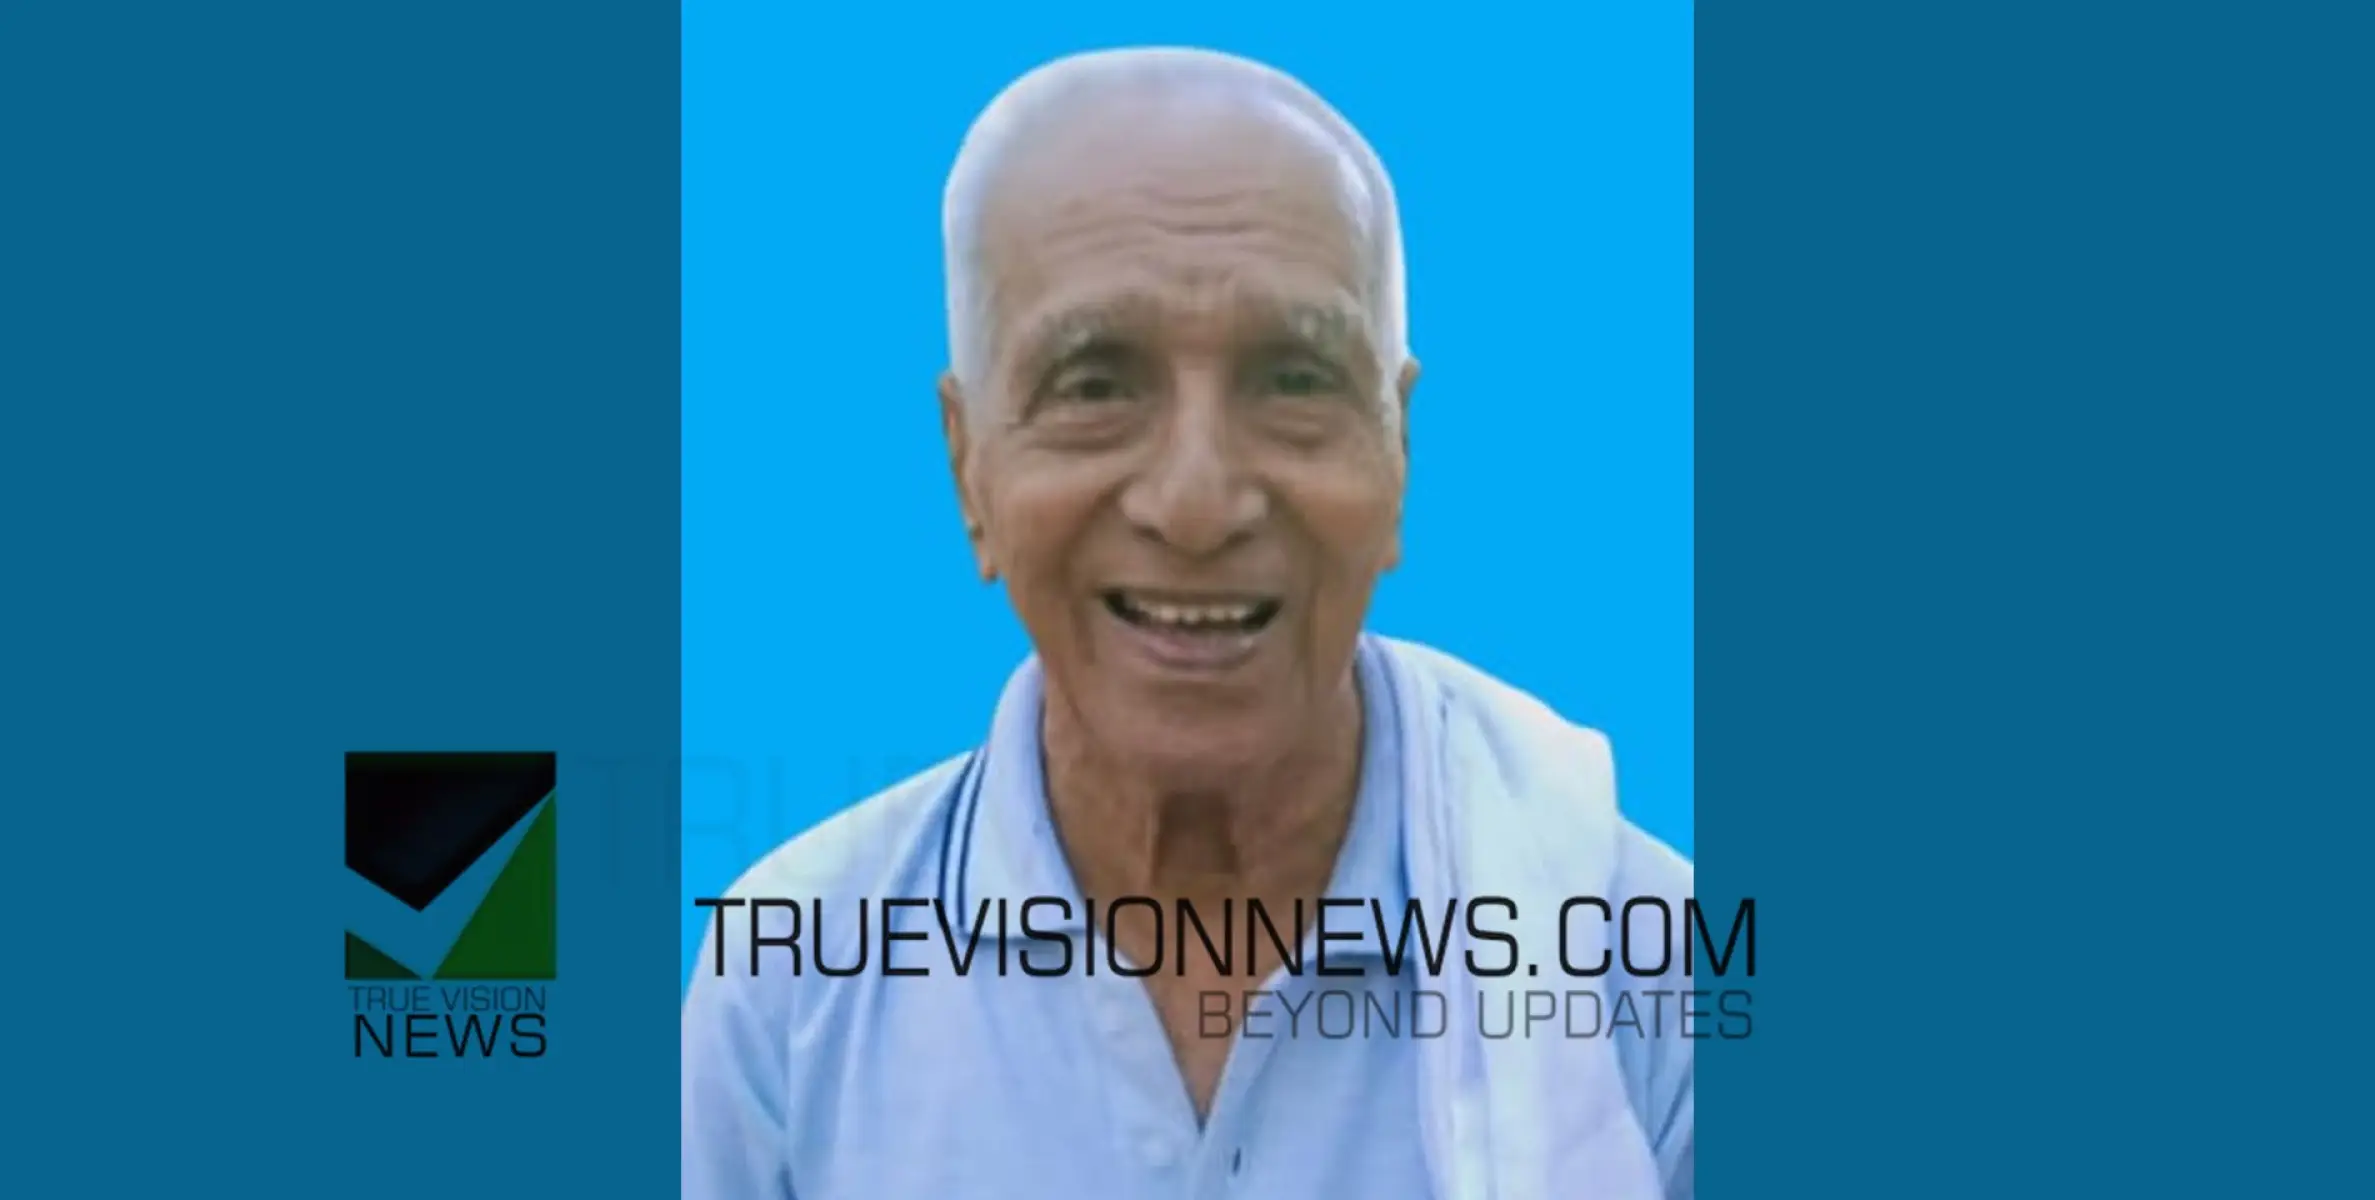 #obituary | ചങ്ങാരോത്ത് കണ്ണൻ അന്തരിച്ചു